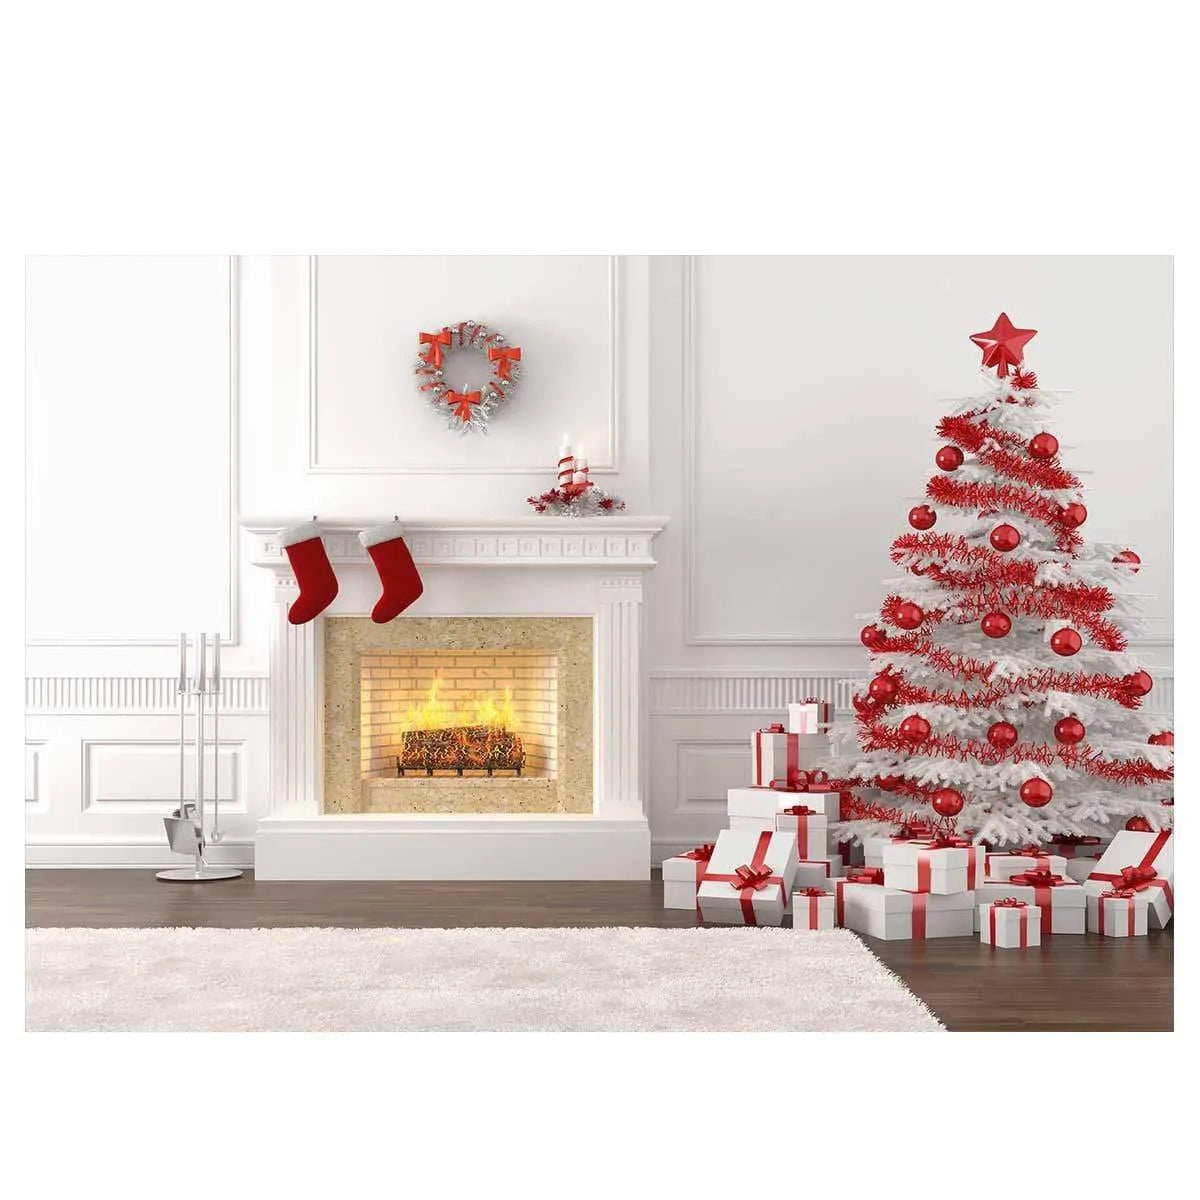 Allenjoy White Fireplace  Christmas Tree Living Room Backdrop - Allenjoystudio